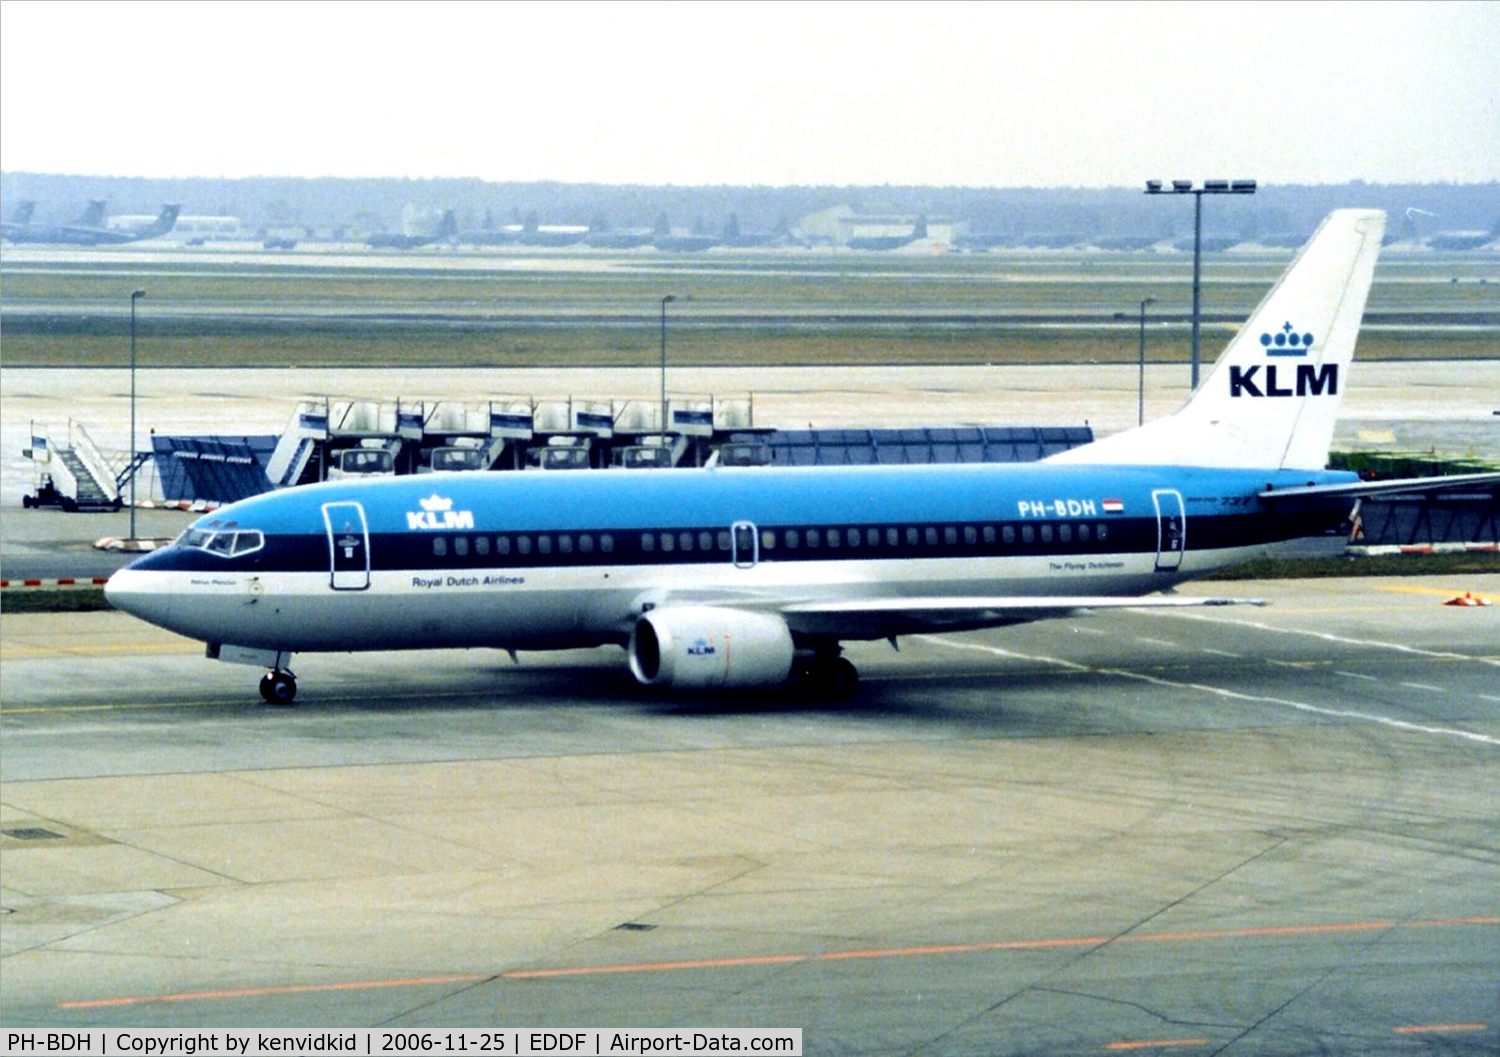 PH-BDH, 1986 Boeing 737-306 C/N 23543, KLM Royal Dutch Airlines.